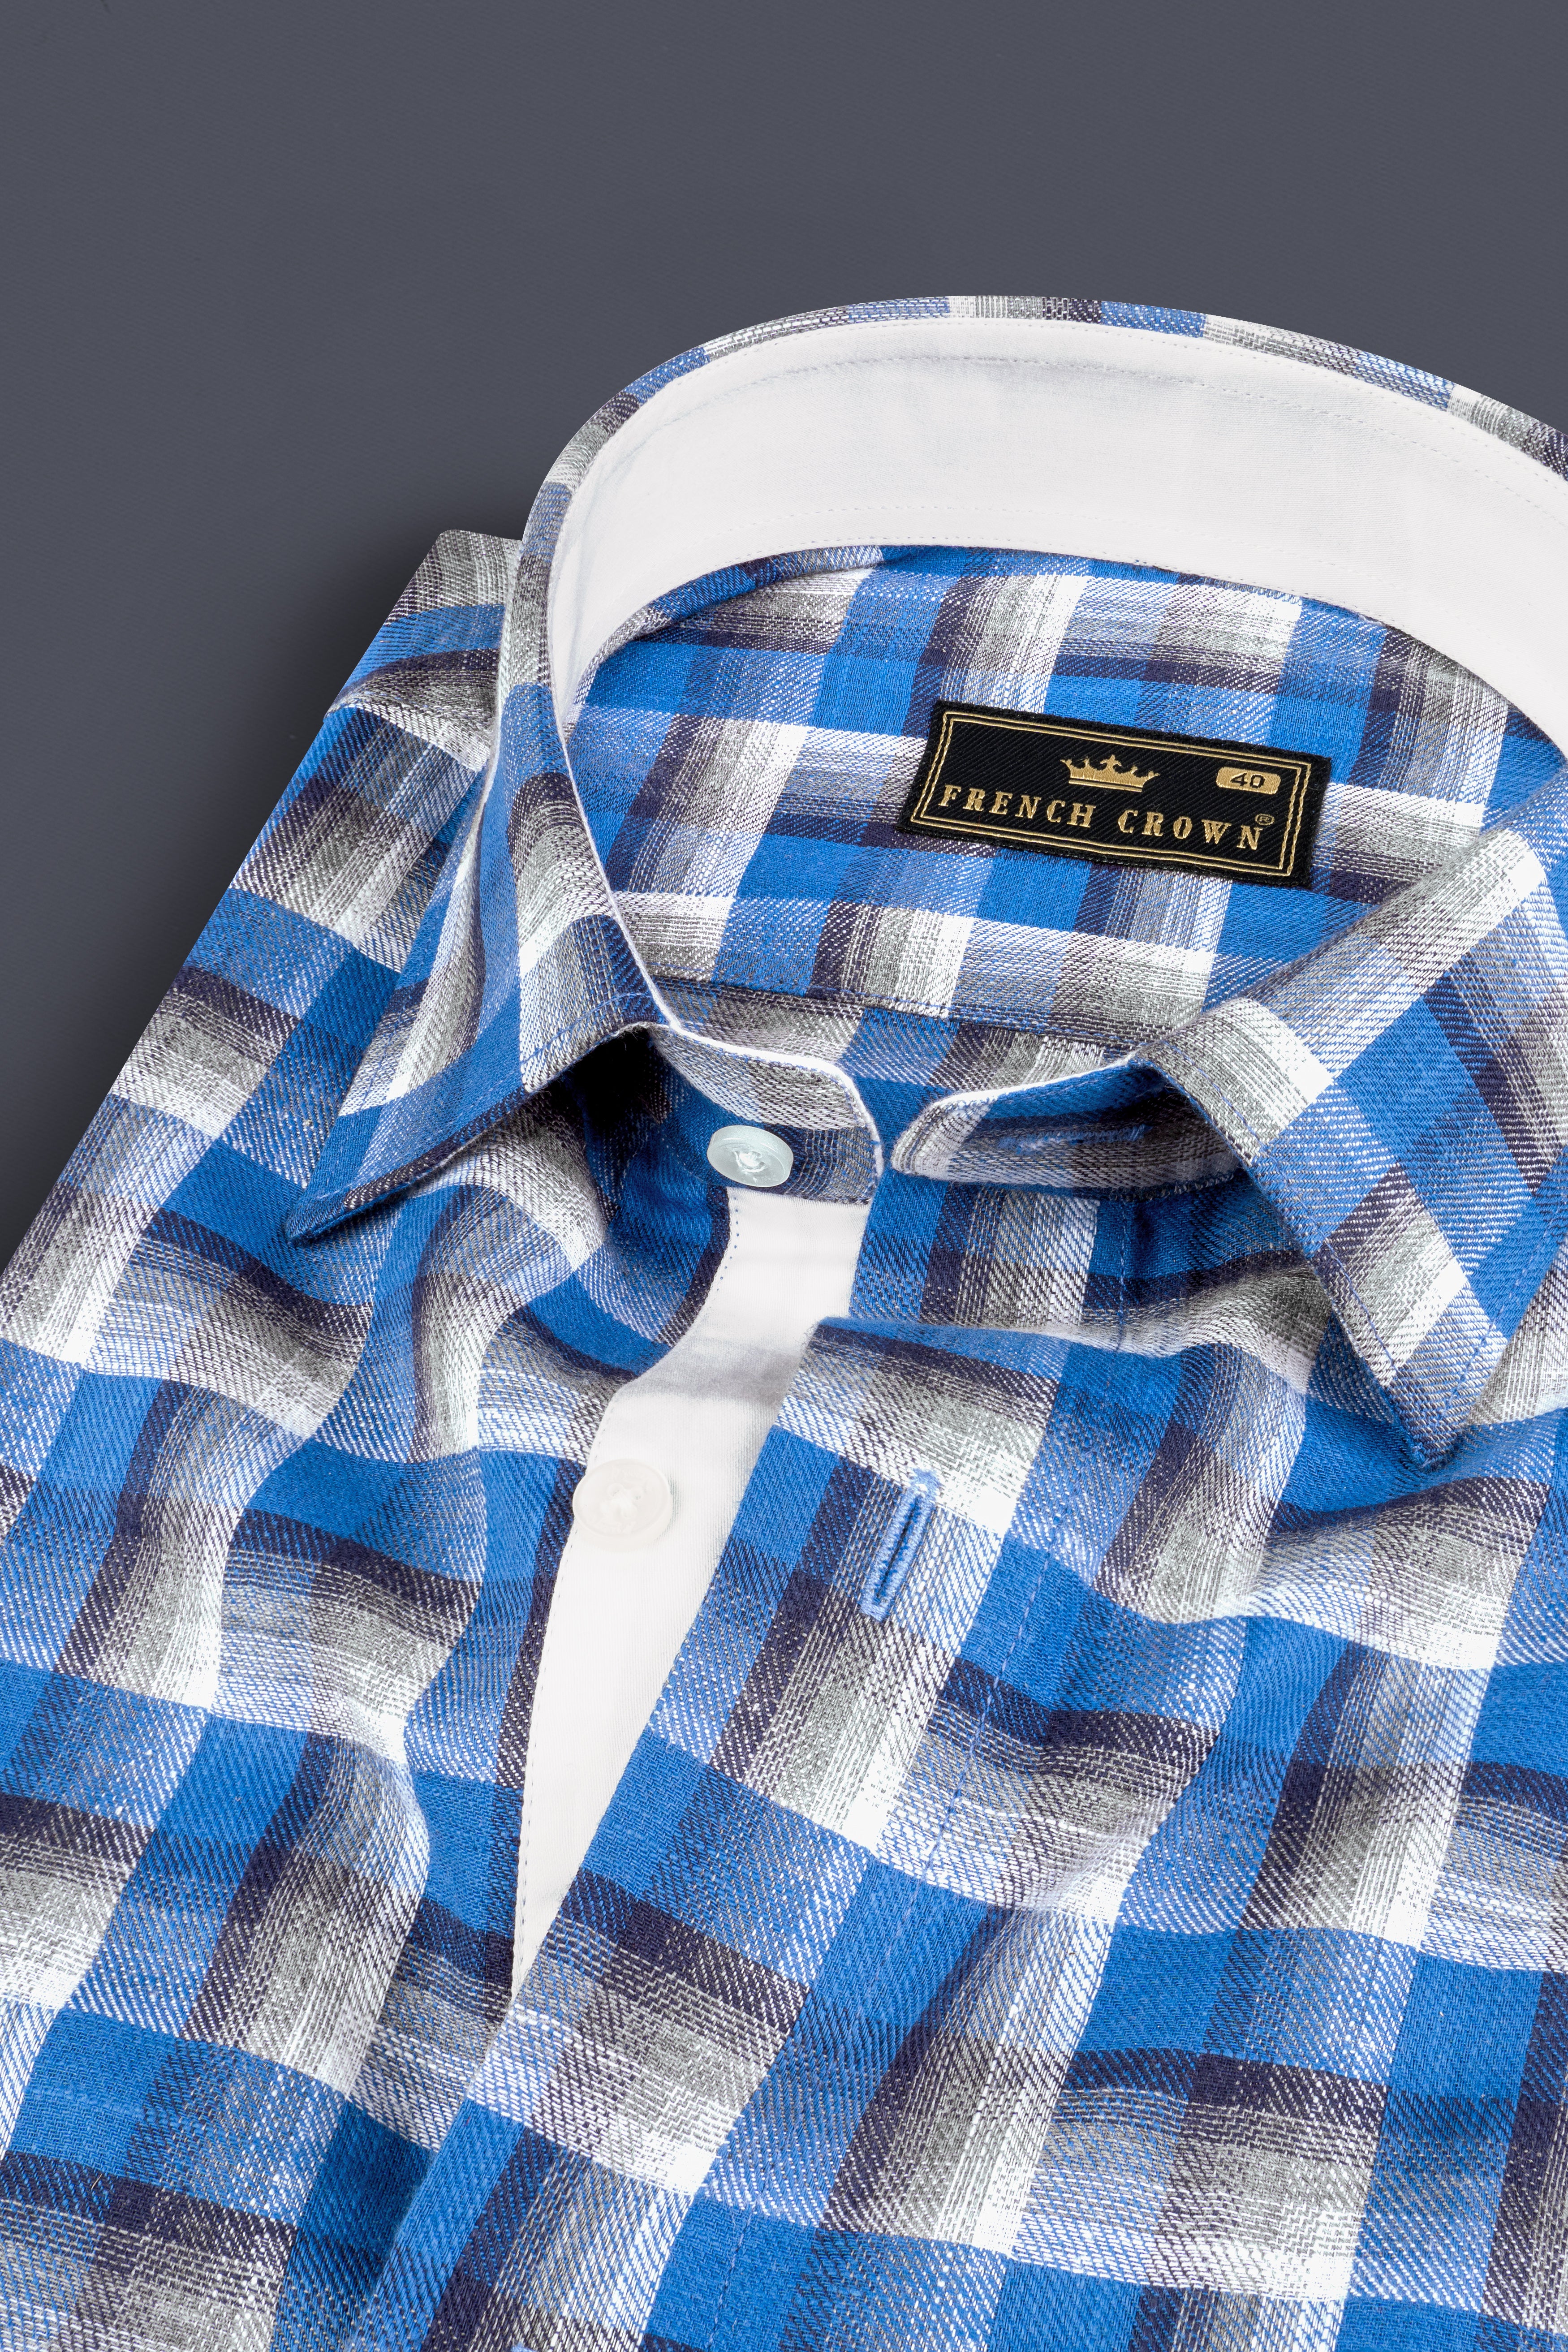 White and Venice Blue Twill Textured Premium Cotton Shirt